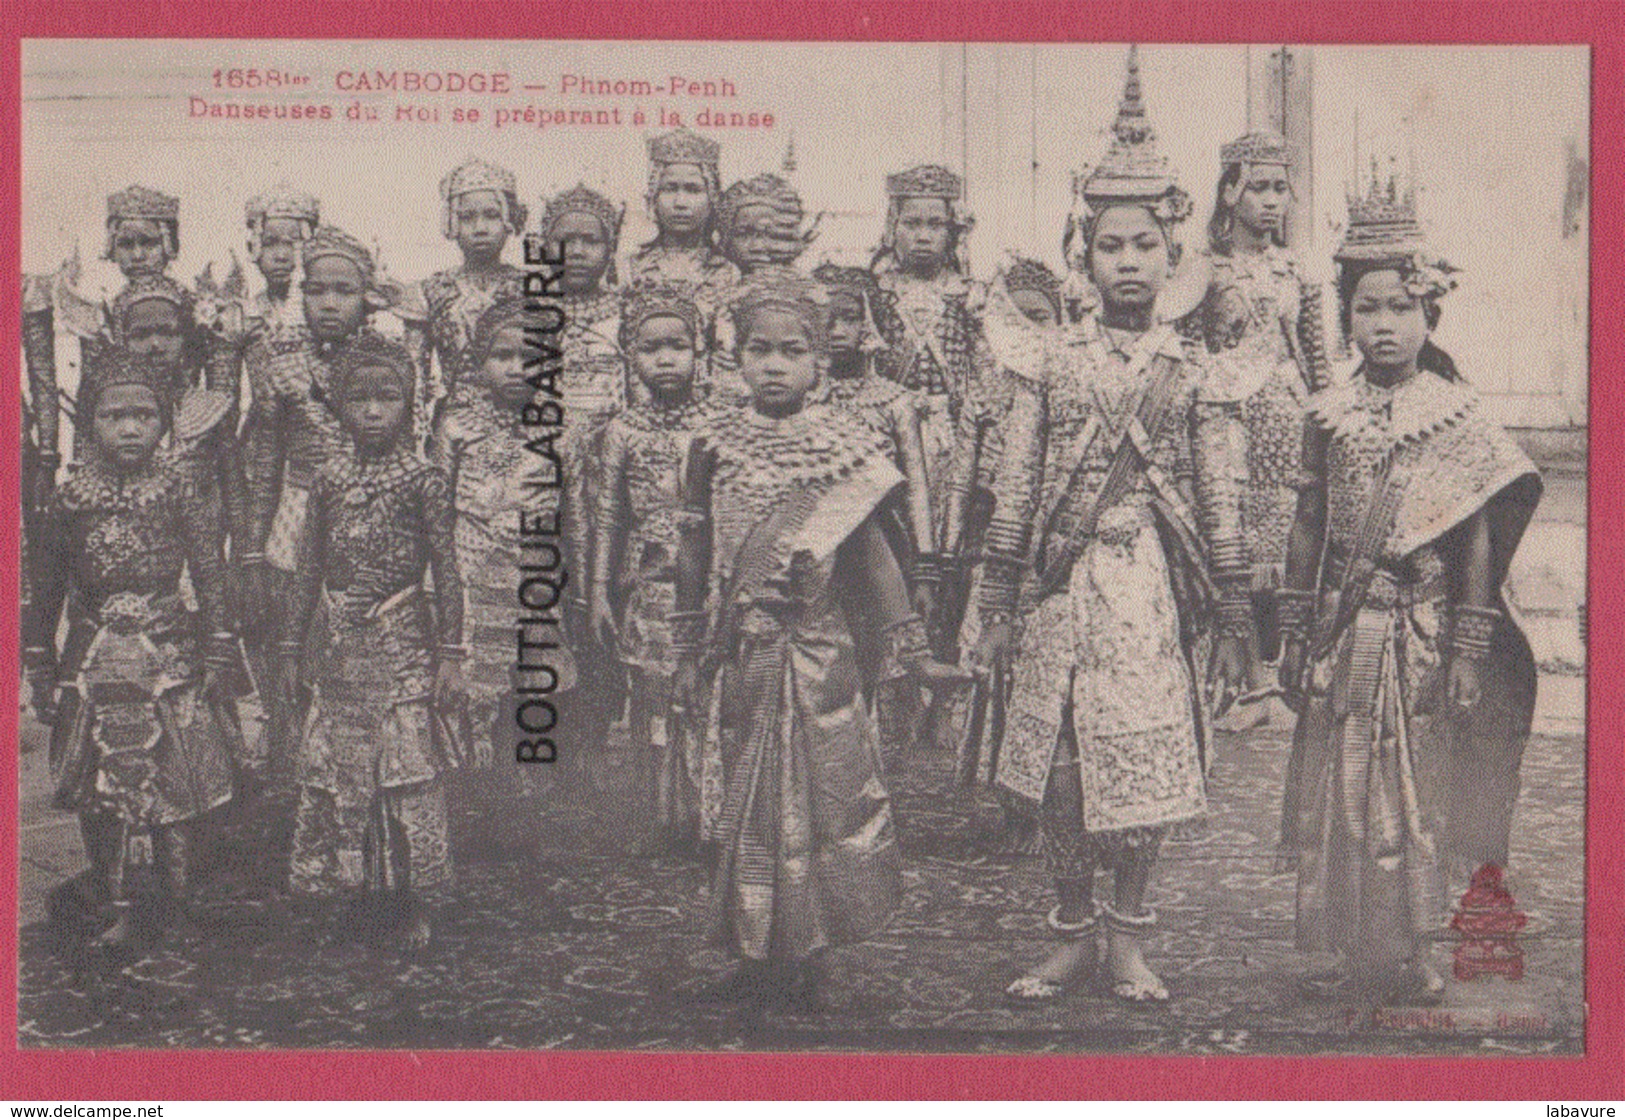 ASIE---CAMBODGE--PHNOM-PENH---Danseuses Du Roi Se Preparant A La Danse--beau Plan--animé - Cambodge